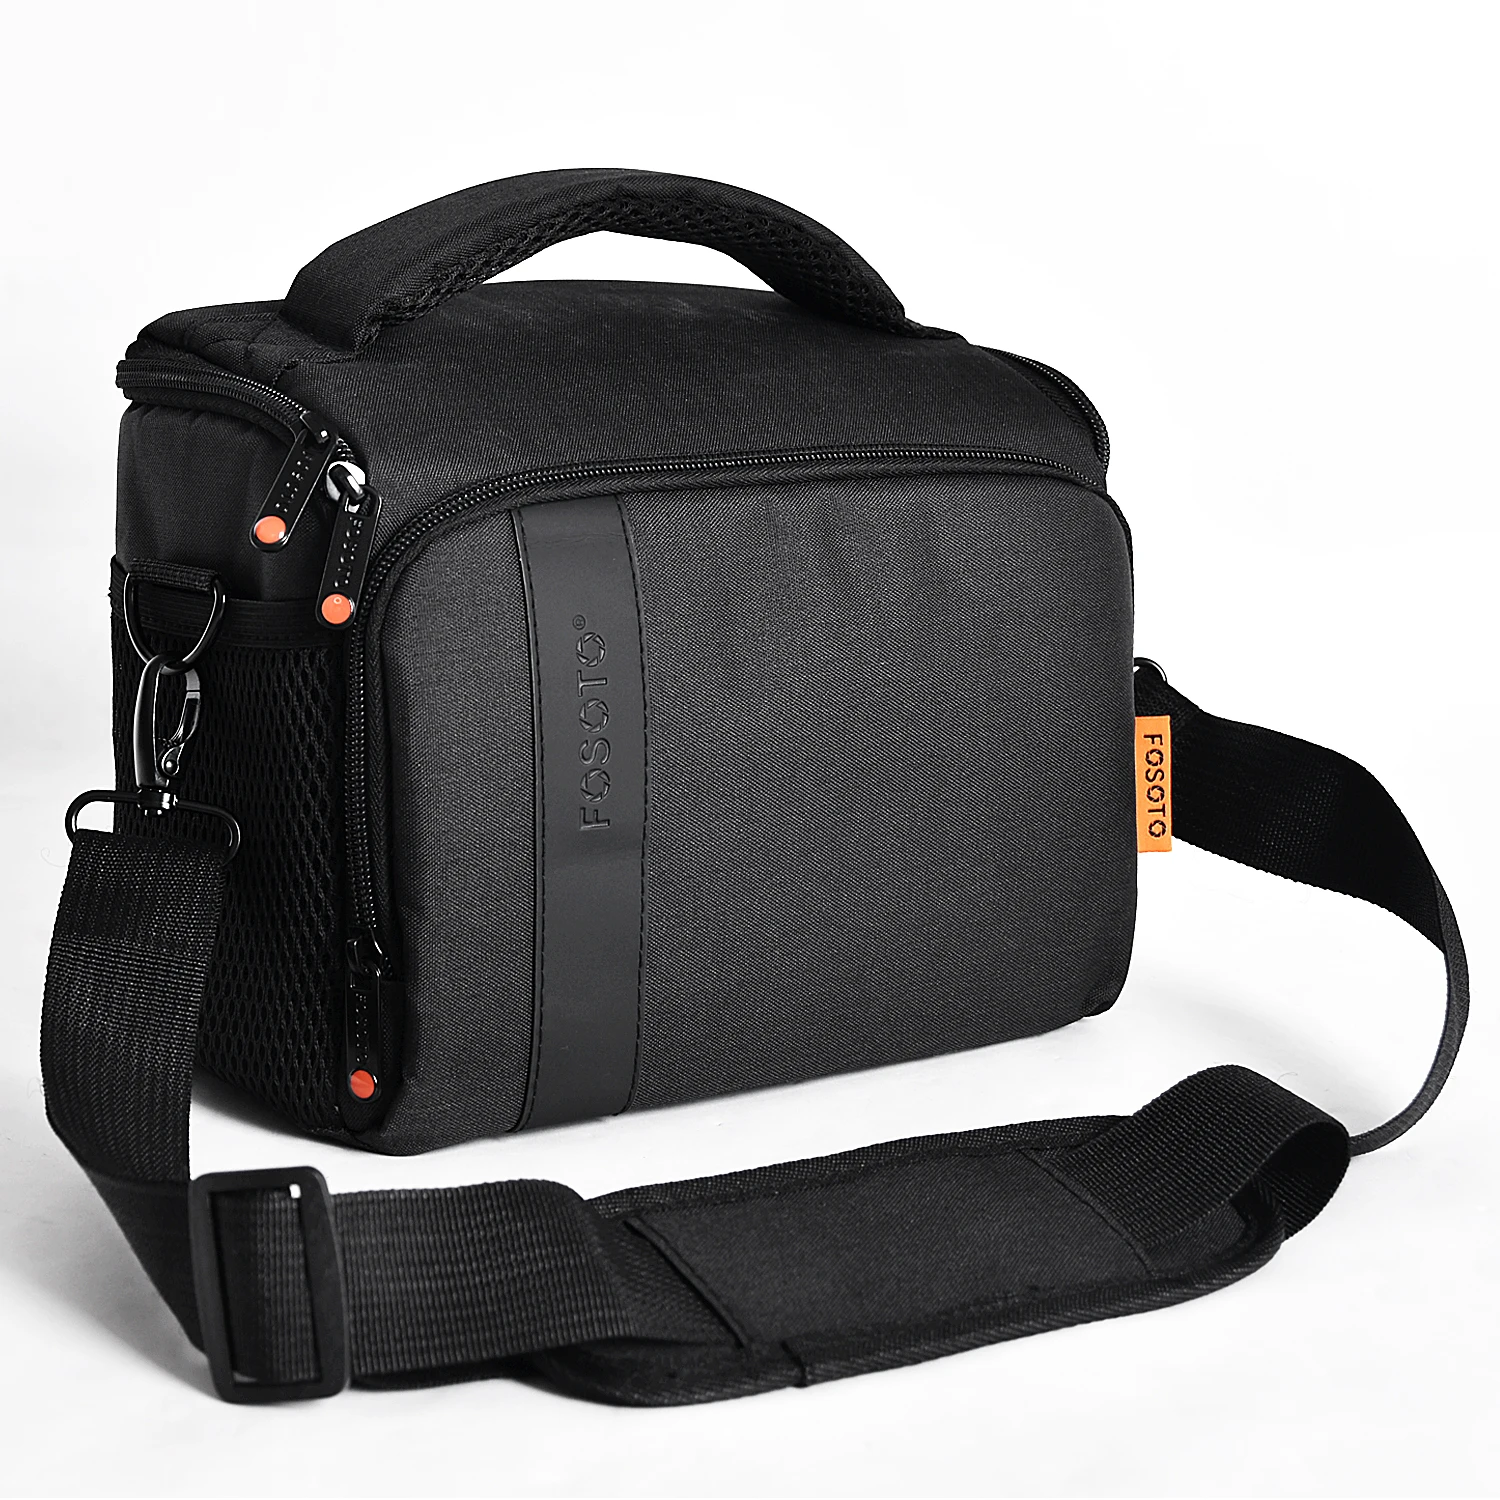 

FOSOTO DSLR Camera Bag Waterproof Fashion Shoulder Bag Video Camera case For Canon Nikon Sony Lens Pouch Photography Photo Bag, Black/grey